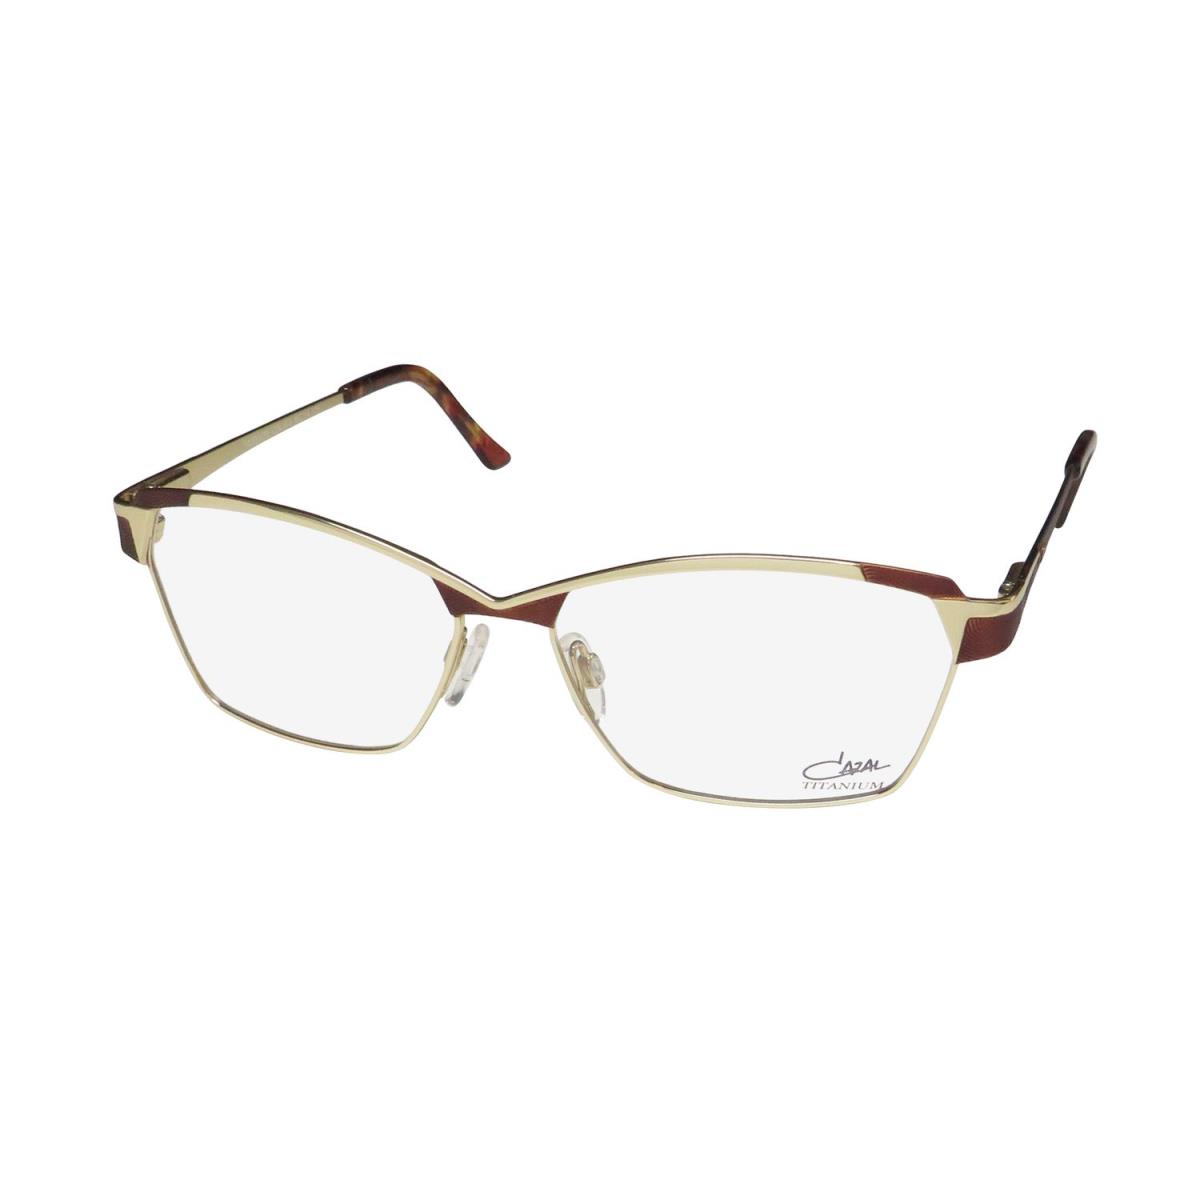 Cazal 4285 Titanium Metal NO Allergy Materials Premium Eyeglass Frame/eyewear Gold / Brown